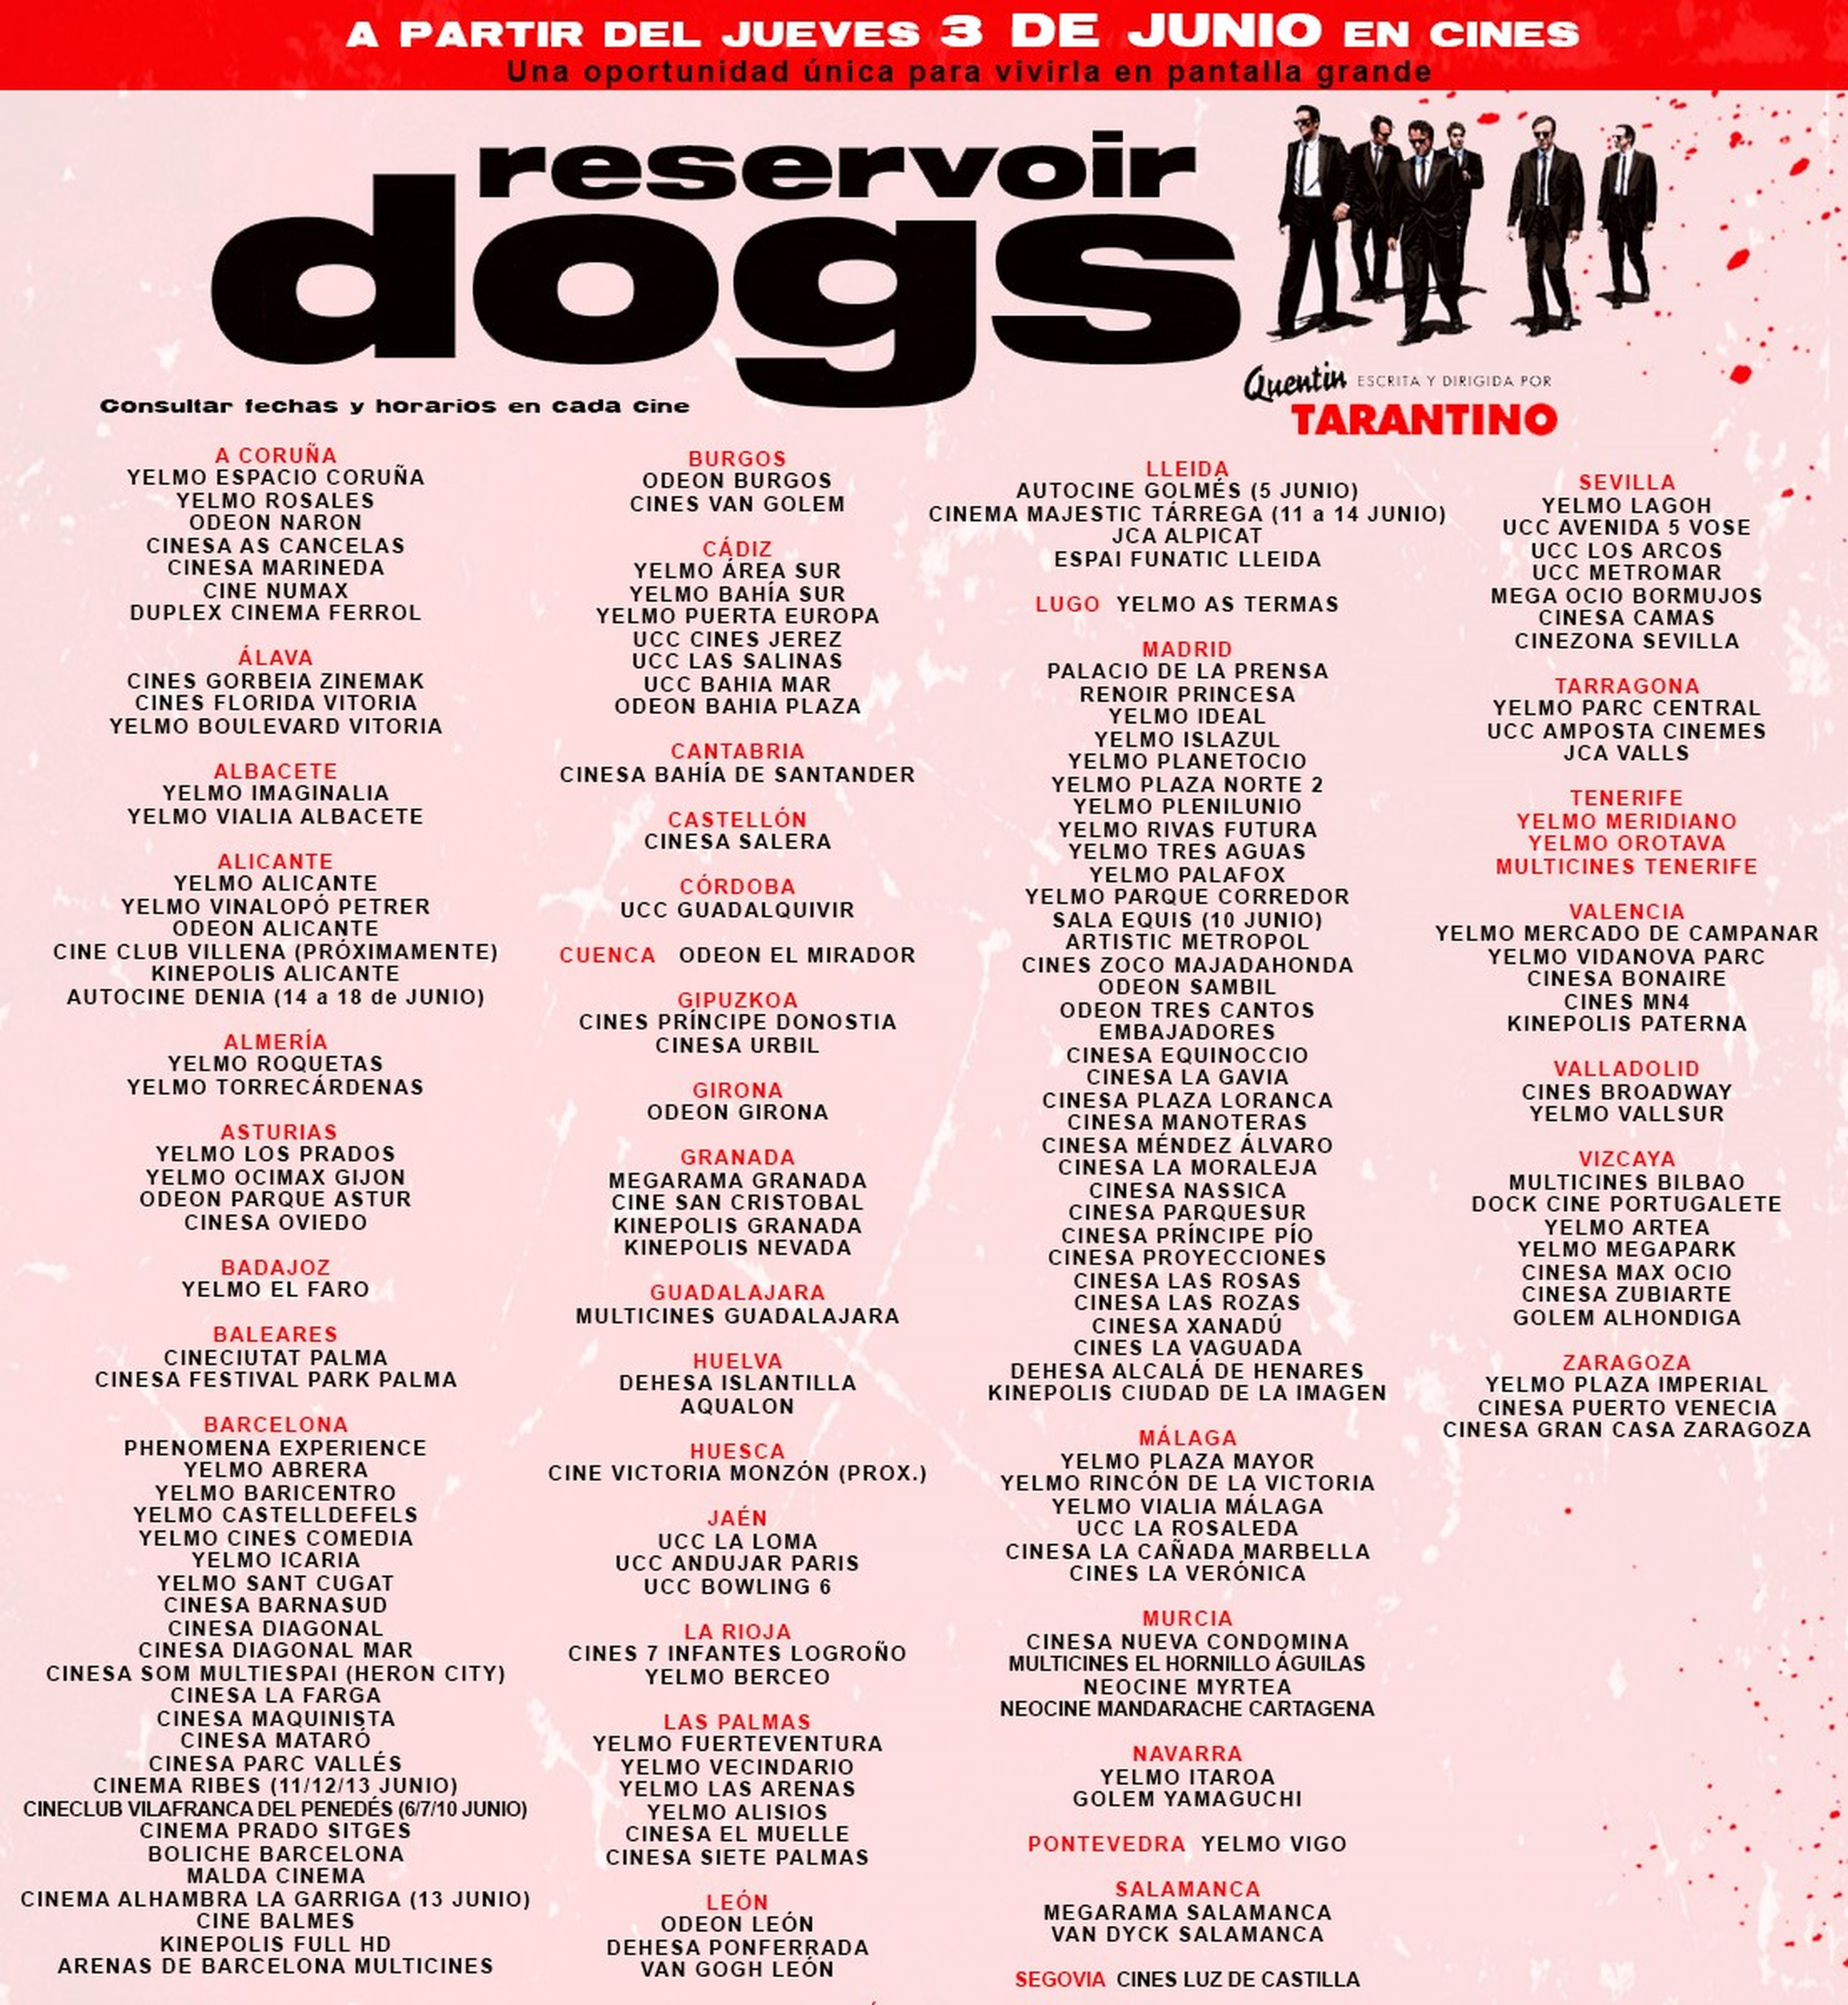 Cines en los que se proyecta Reservoir Dogs